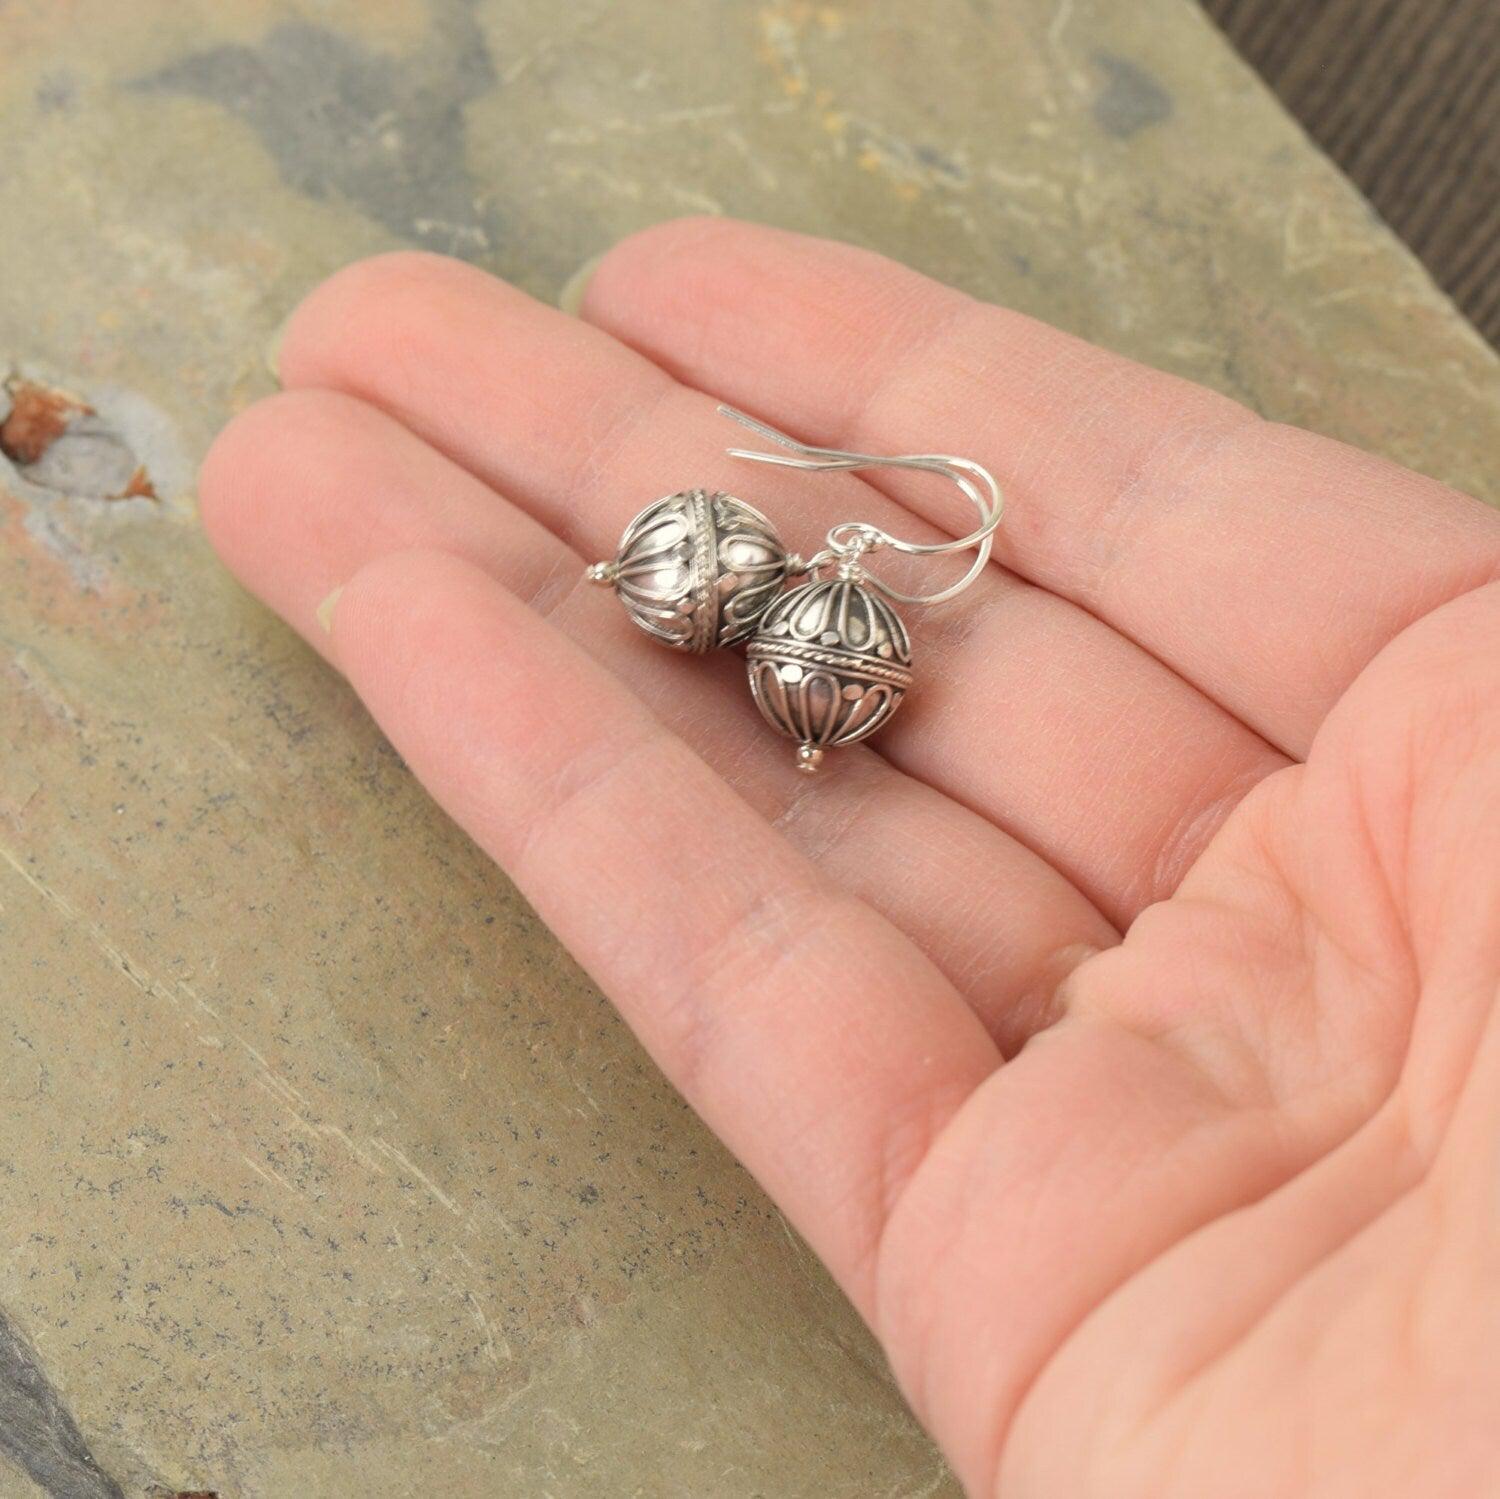 Hot Air balloon earrings, Sterling silver